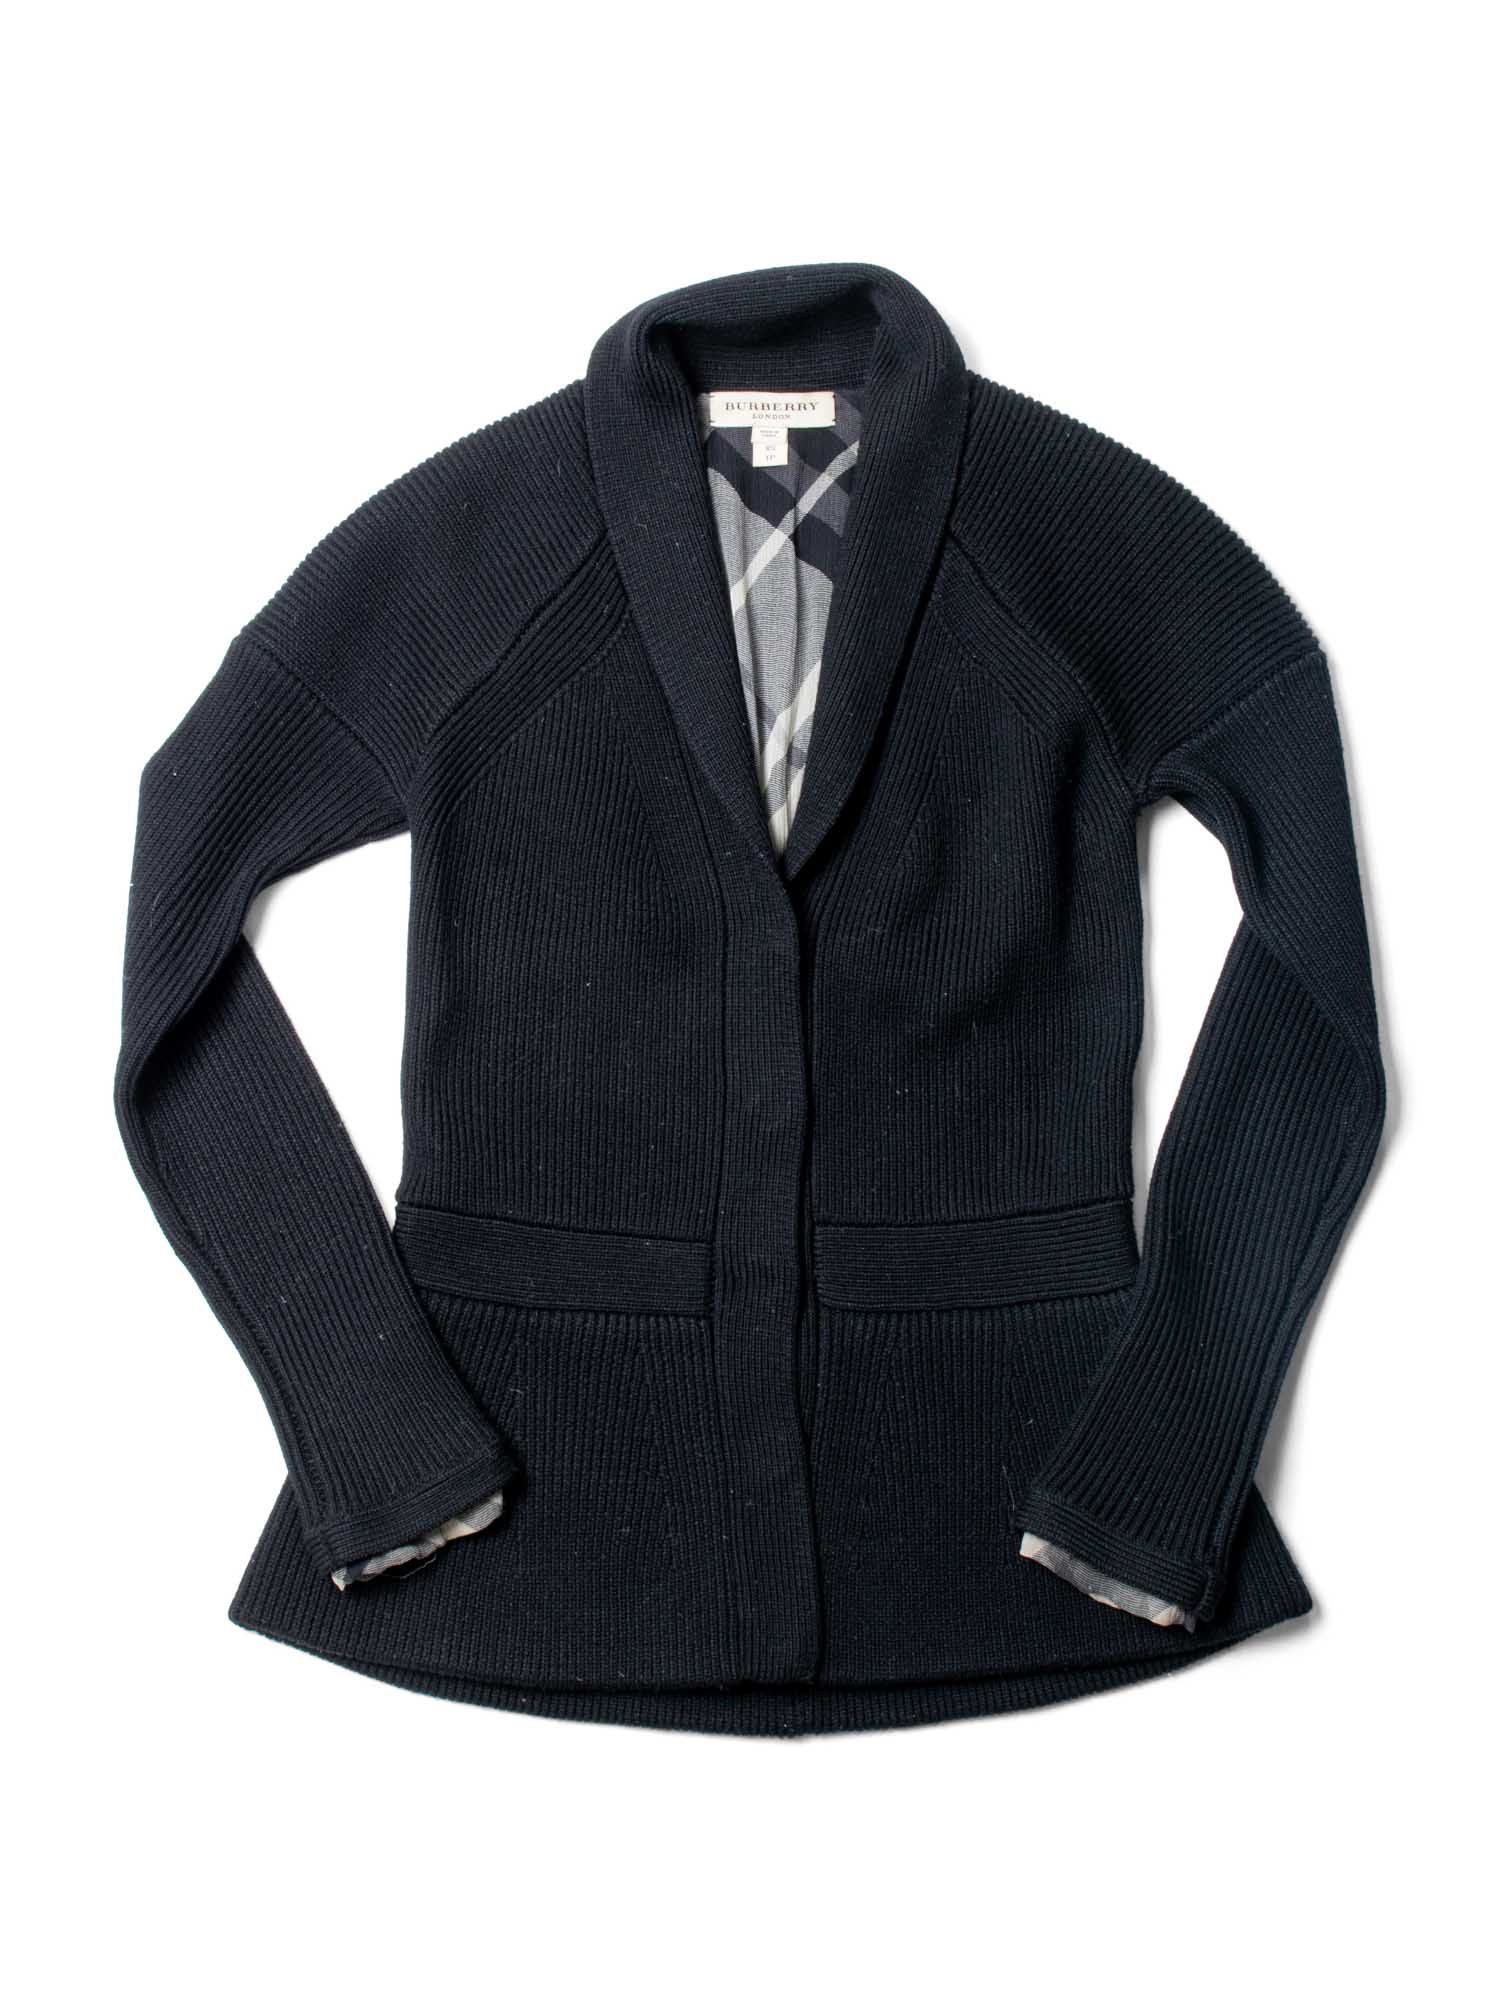 Burberry Nova Check Wool Knit Peplum Cardigan Black-designer resale